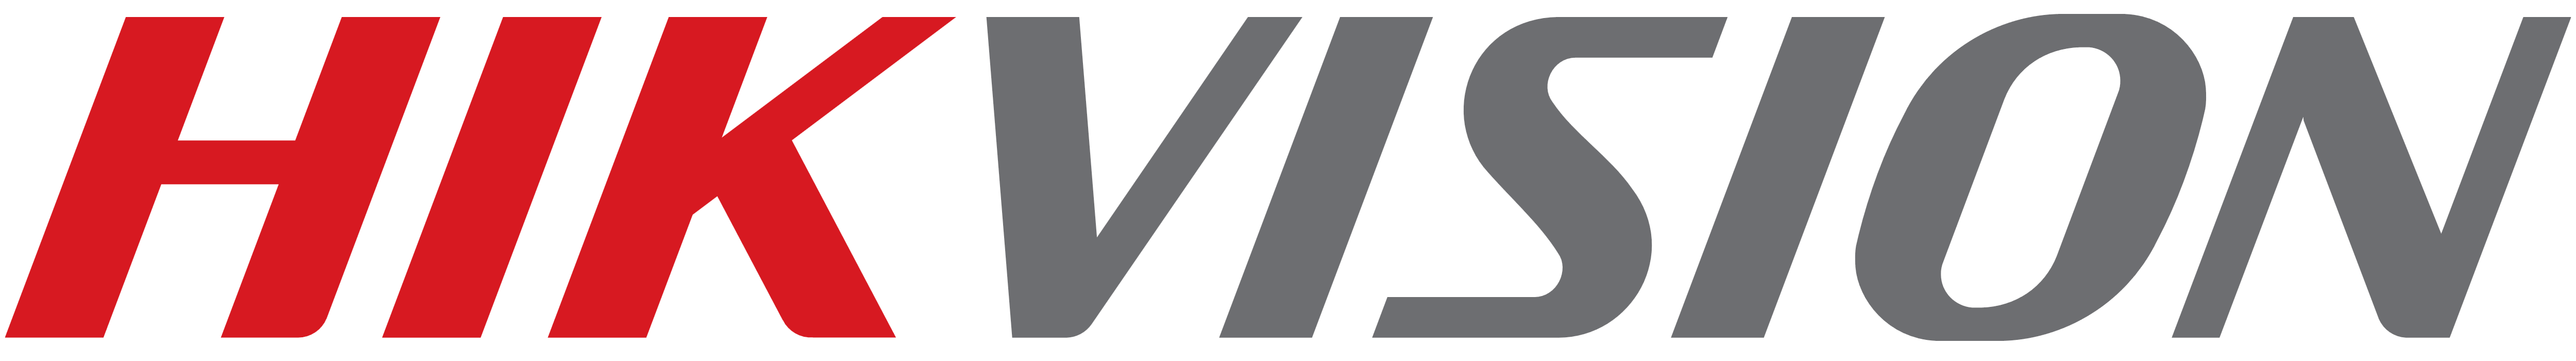 Hikvision IP CCTV Camera Logo